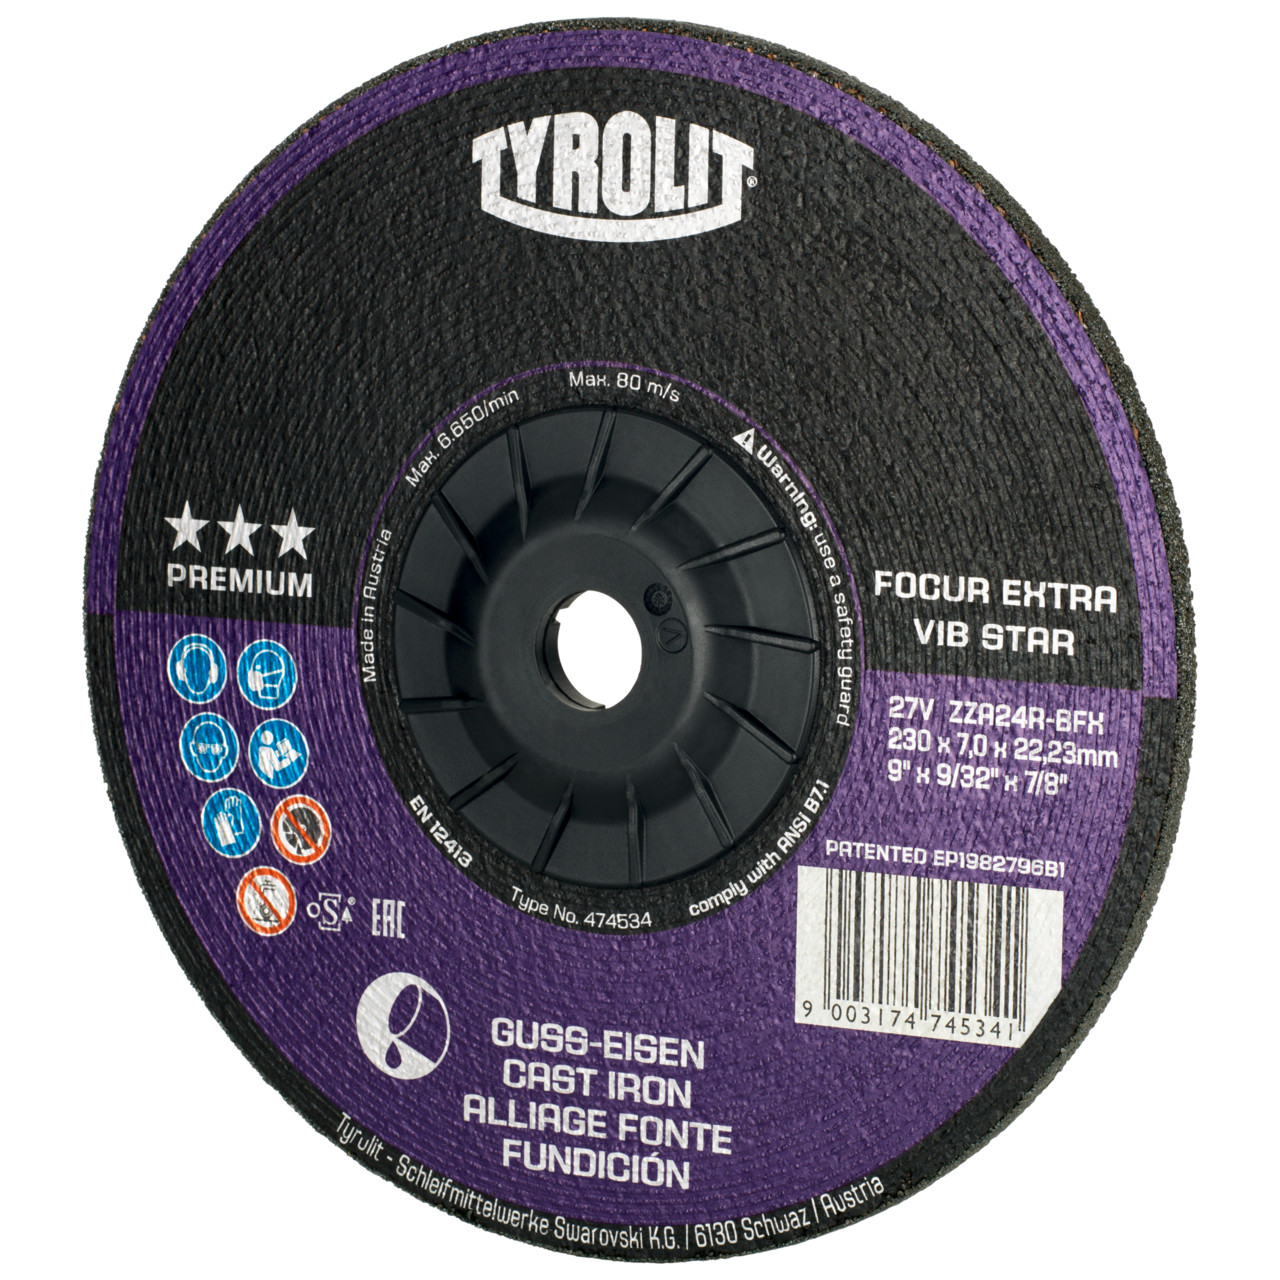 TYROLIT grinding wheel DxUxH 230x7x22.23 FOCUR Extra Vibstar for cast iron, shape: 27 - offset version, Art. 474535